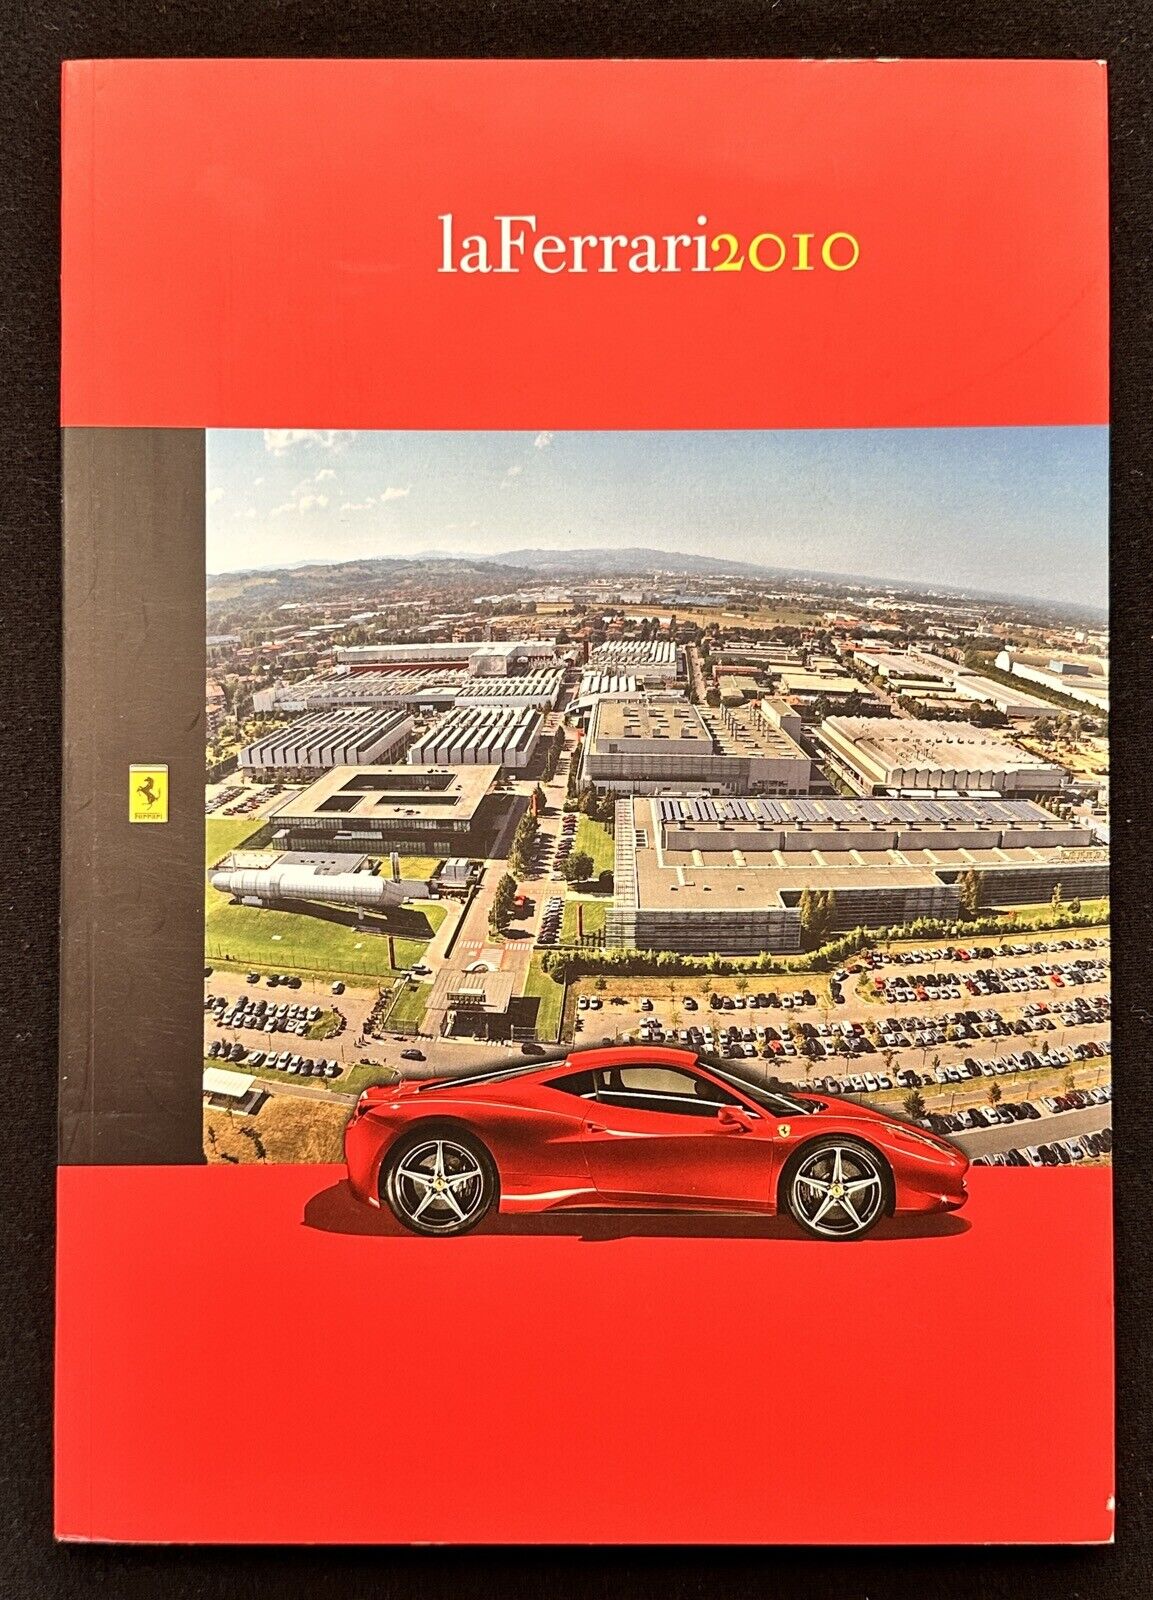 La Ferrari 2010 Yearbook Booklet Brochure Formula 1 Alonso Massa 458 California